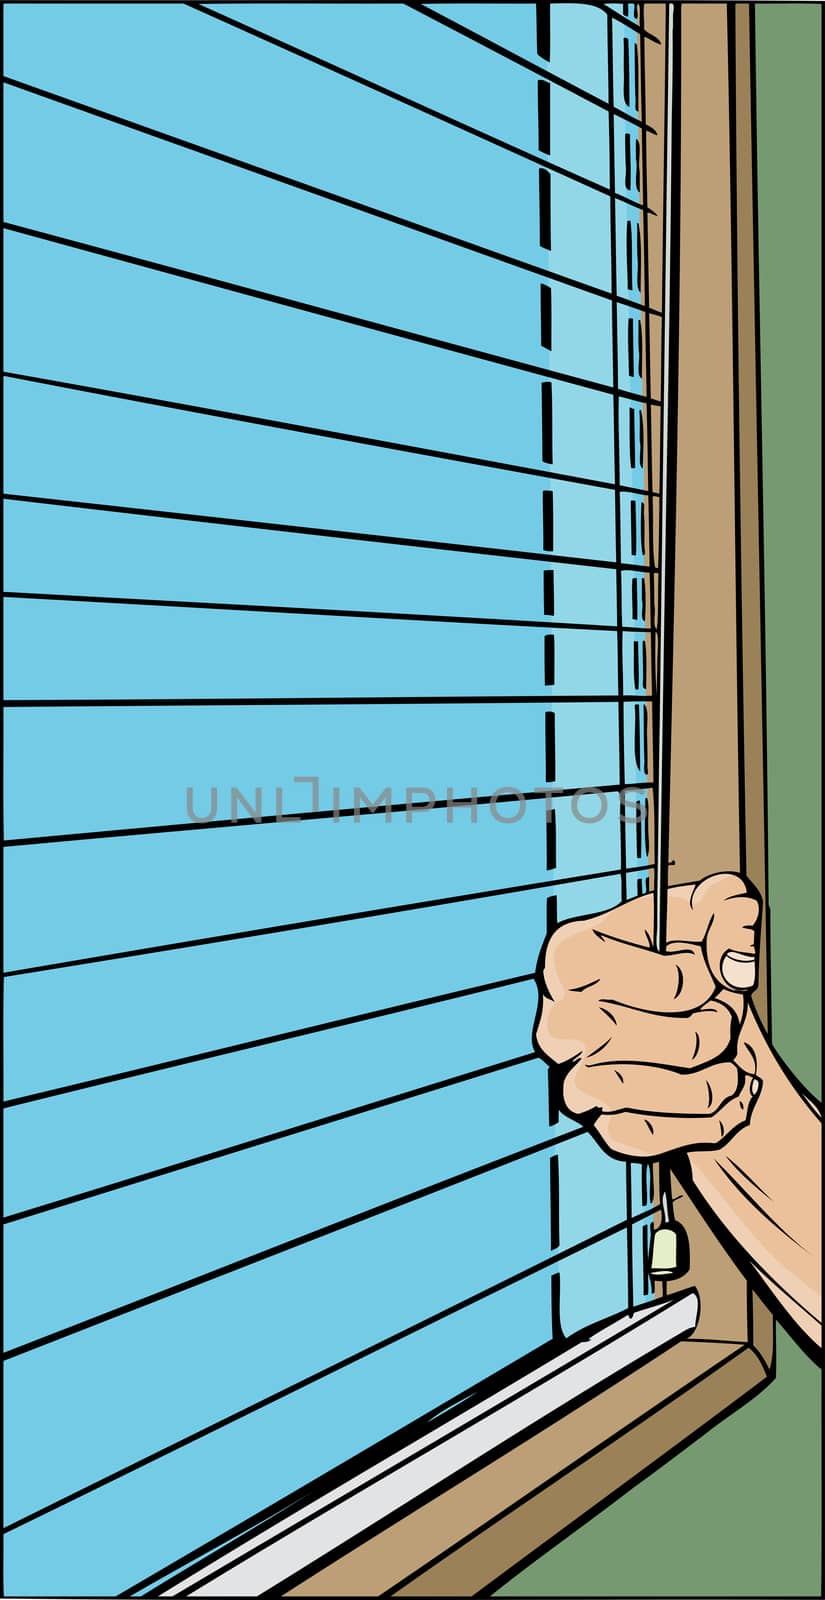 Cartoon of hand opening blinds over window